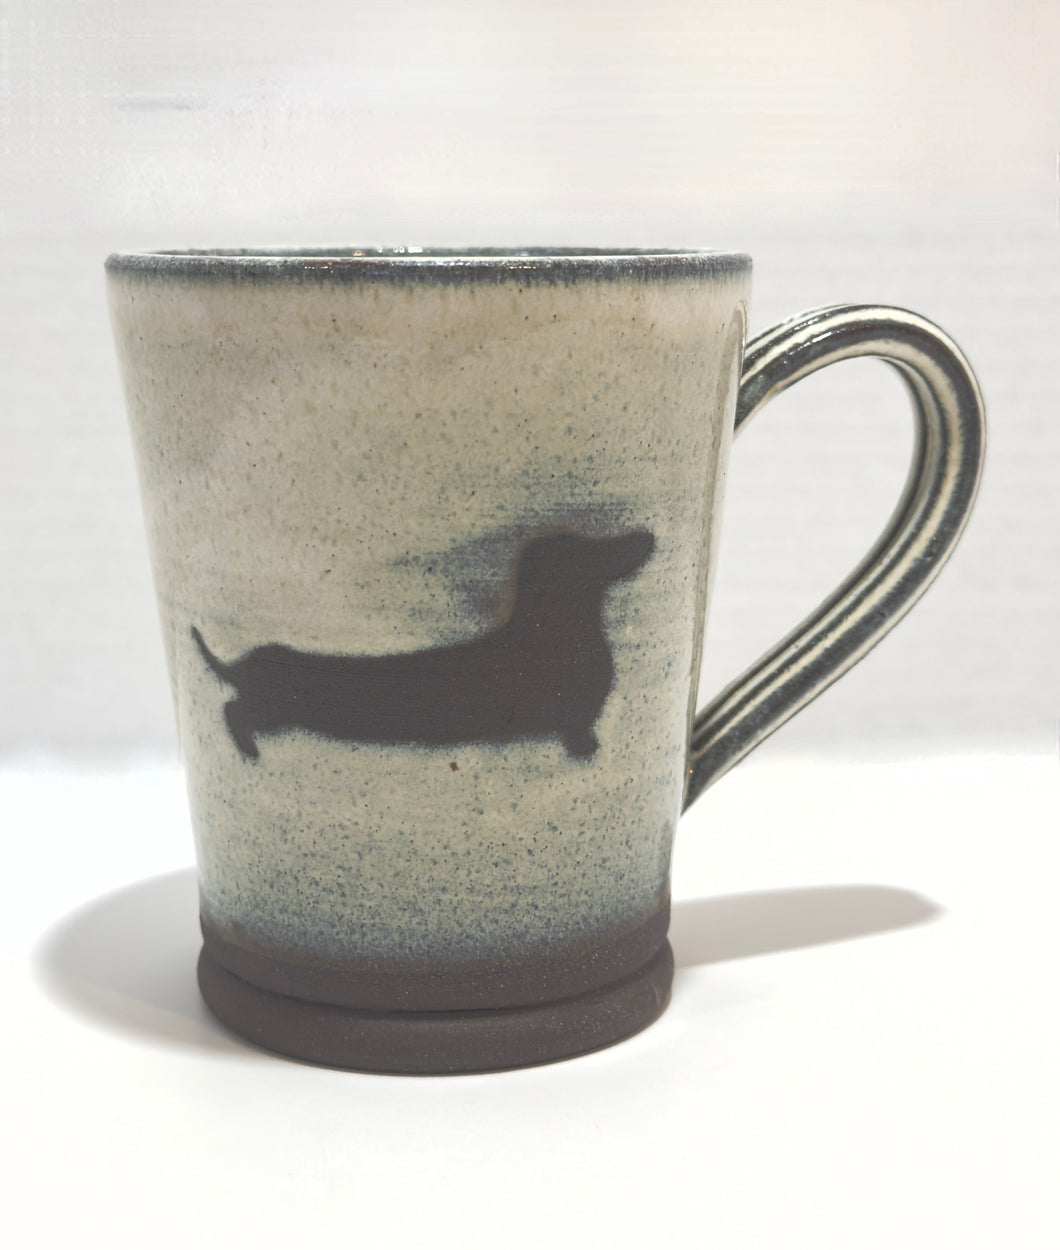 Dachshund Mug - Creamy White over Coffee Clay 12oz